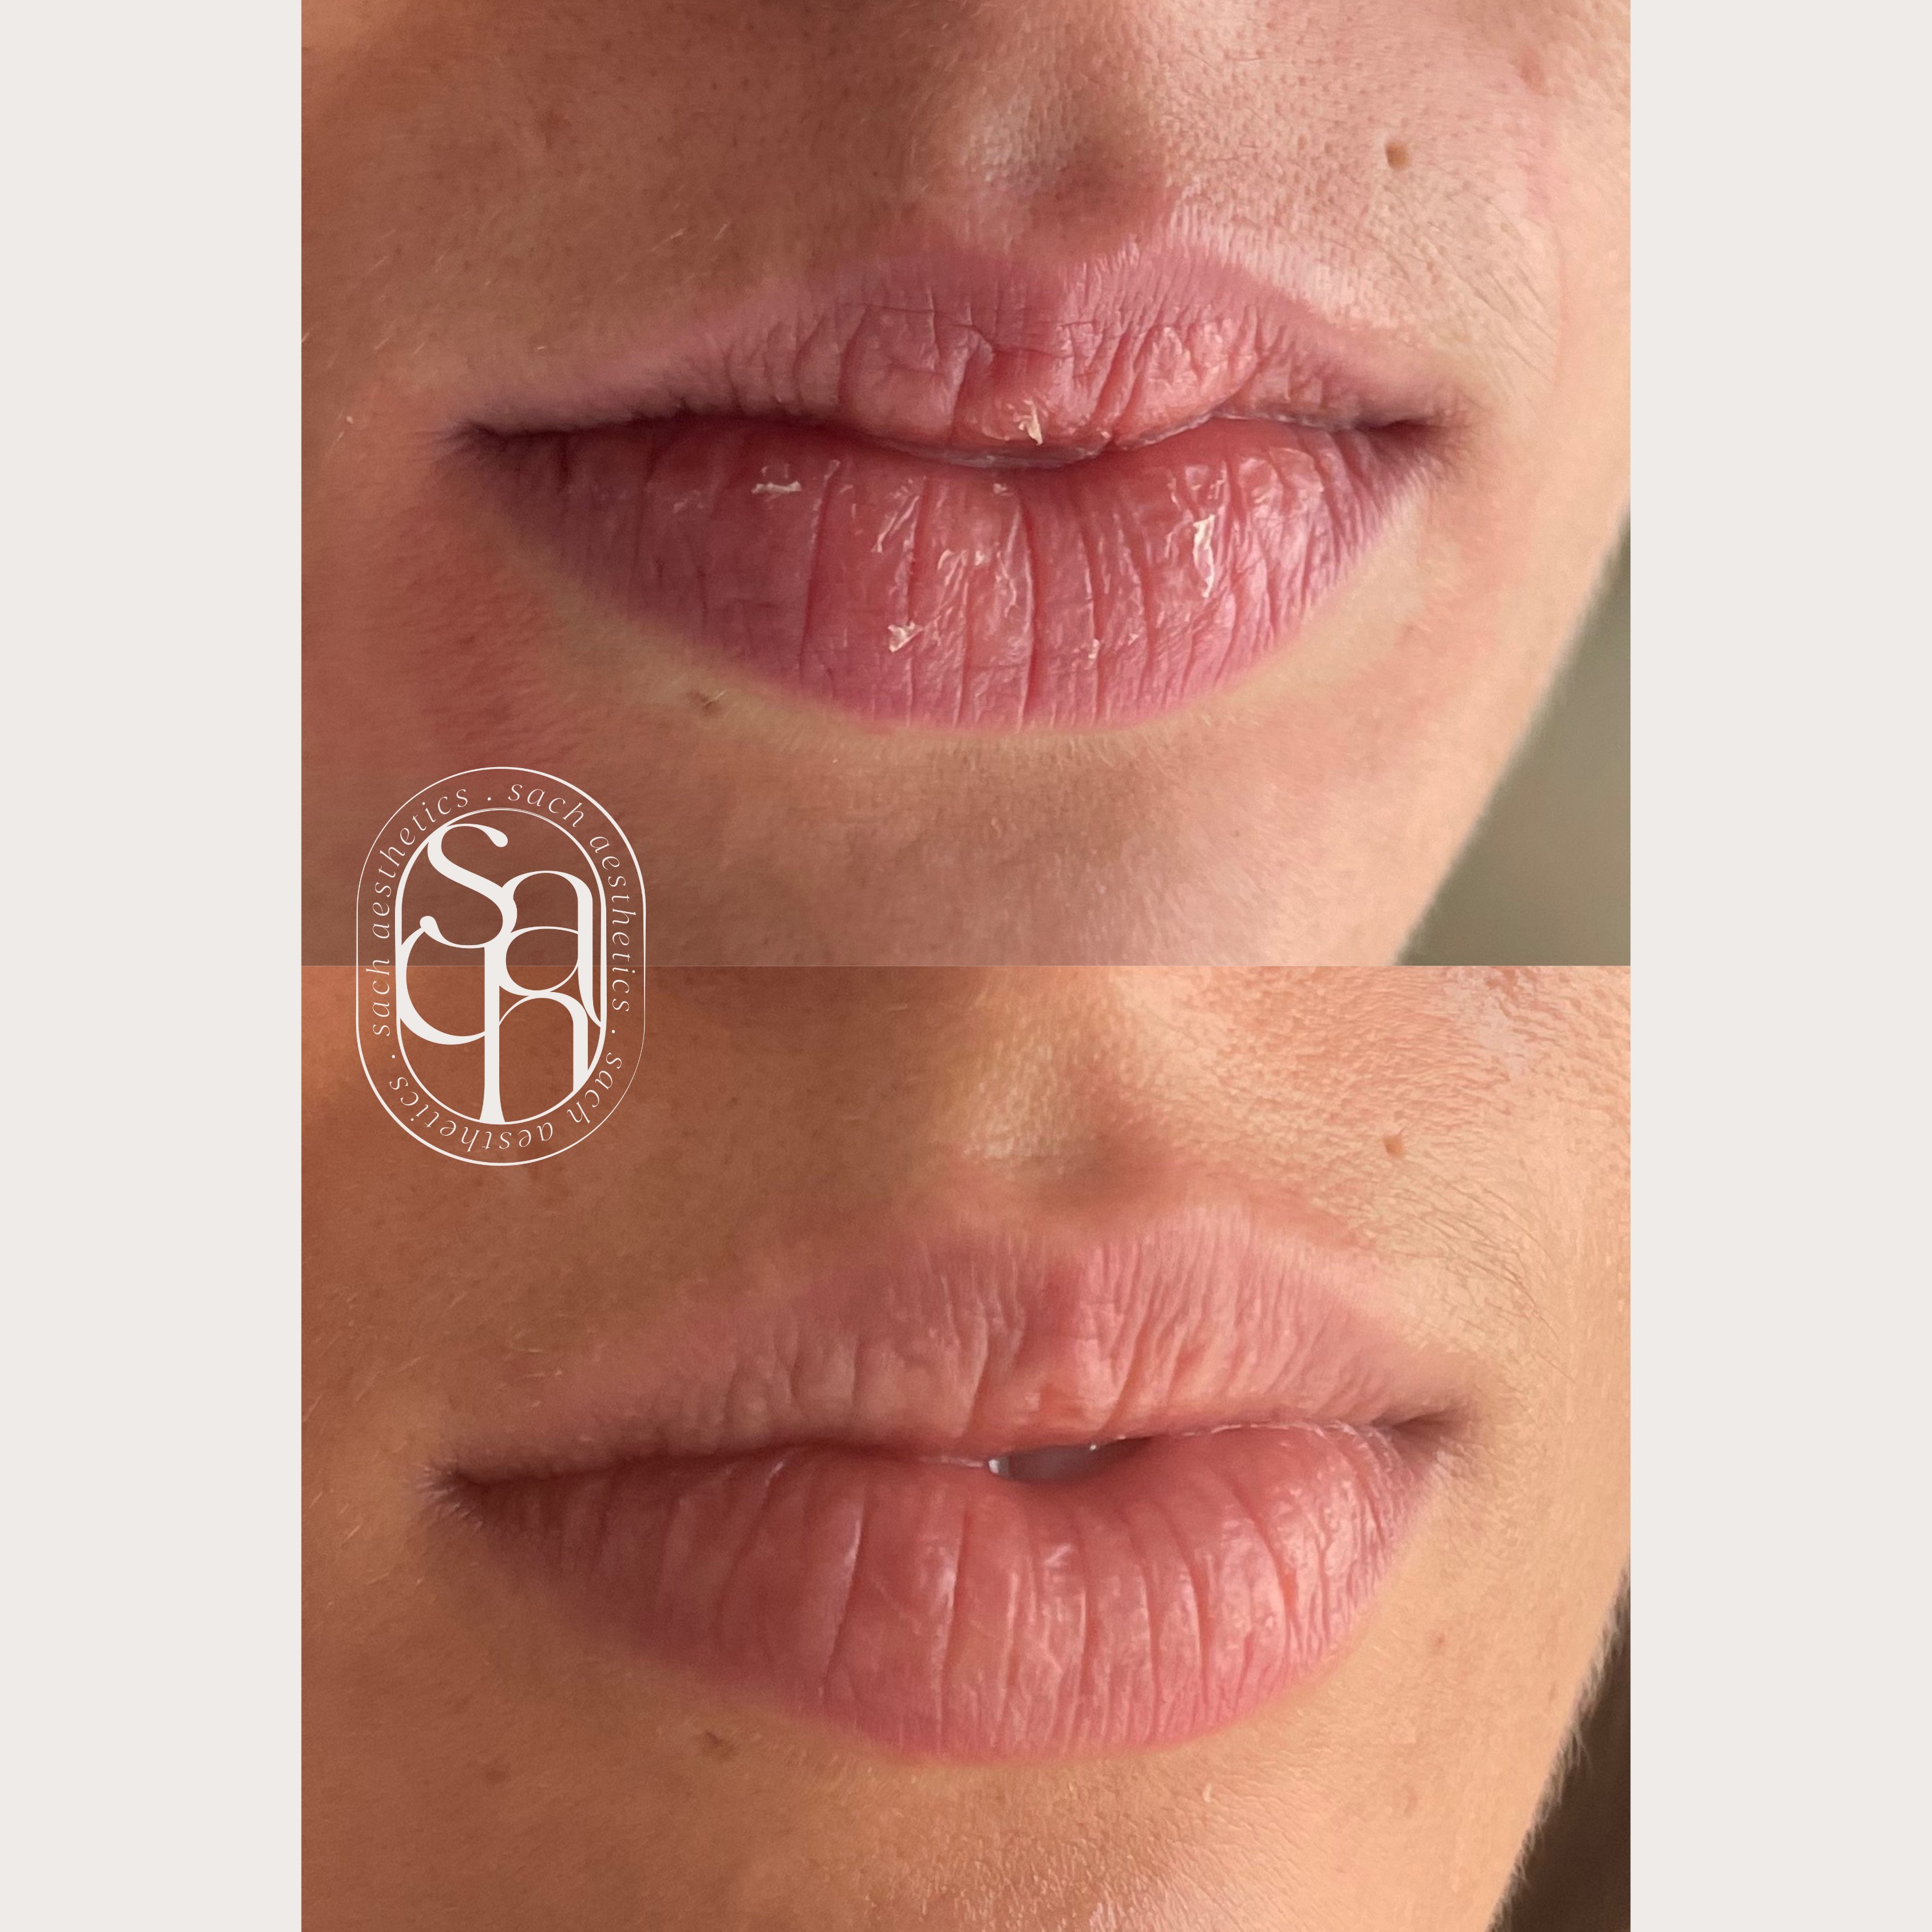 Lip enhancement with restylane lip filler on already voluminous lips.